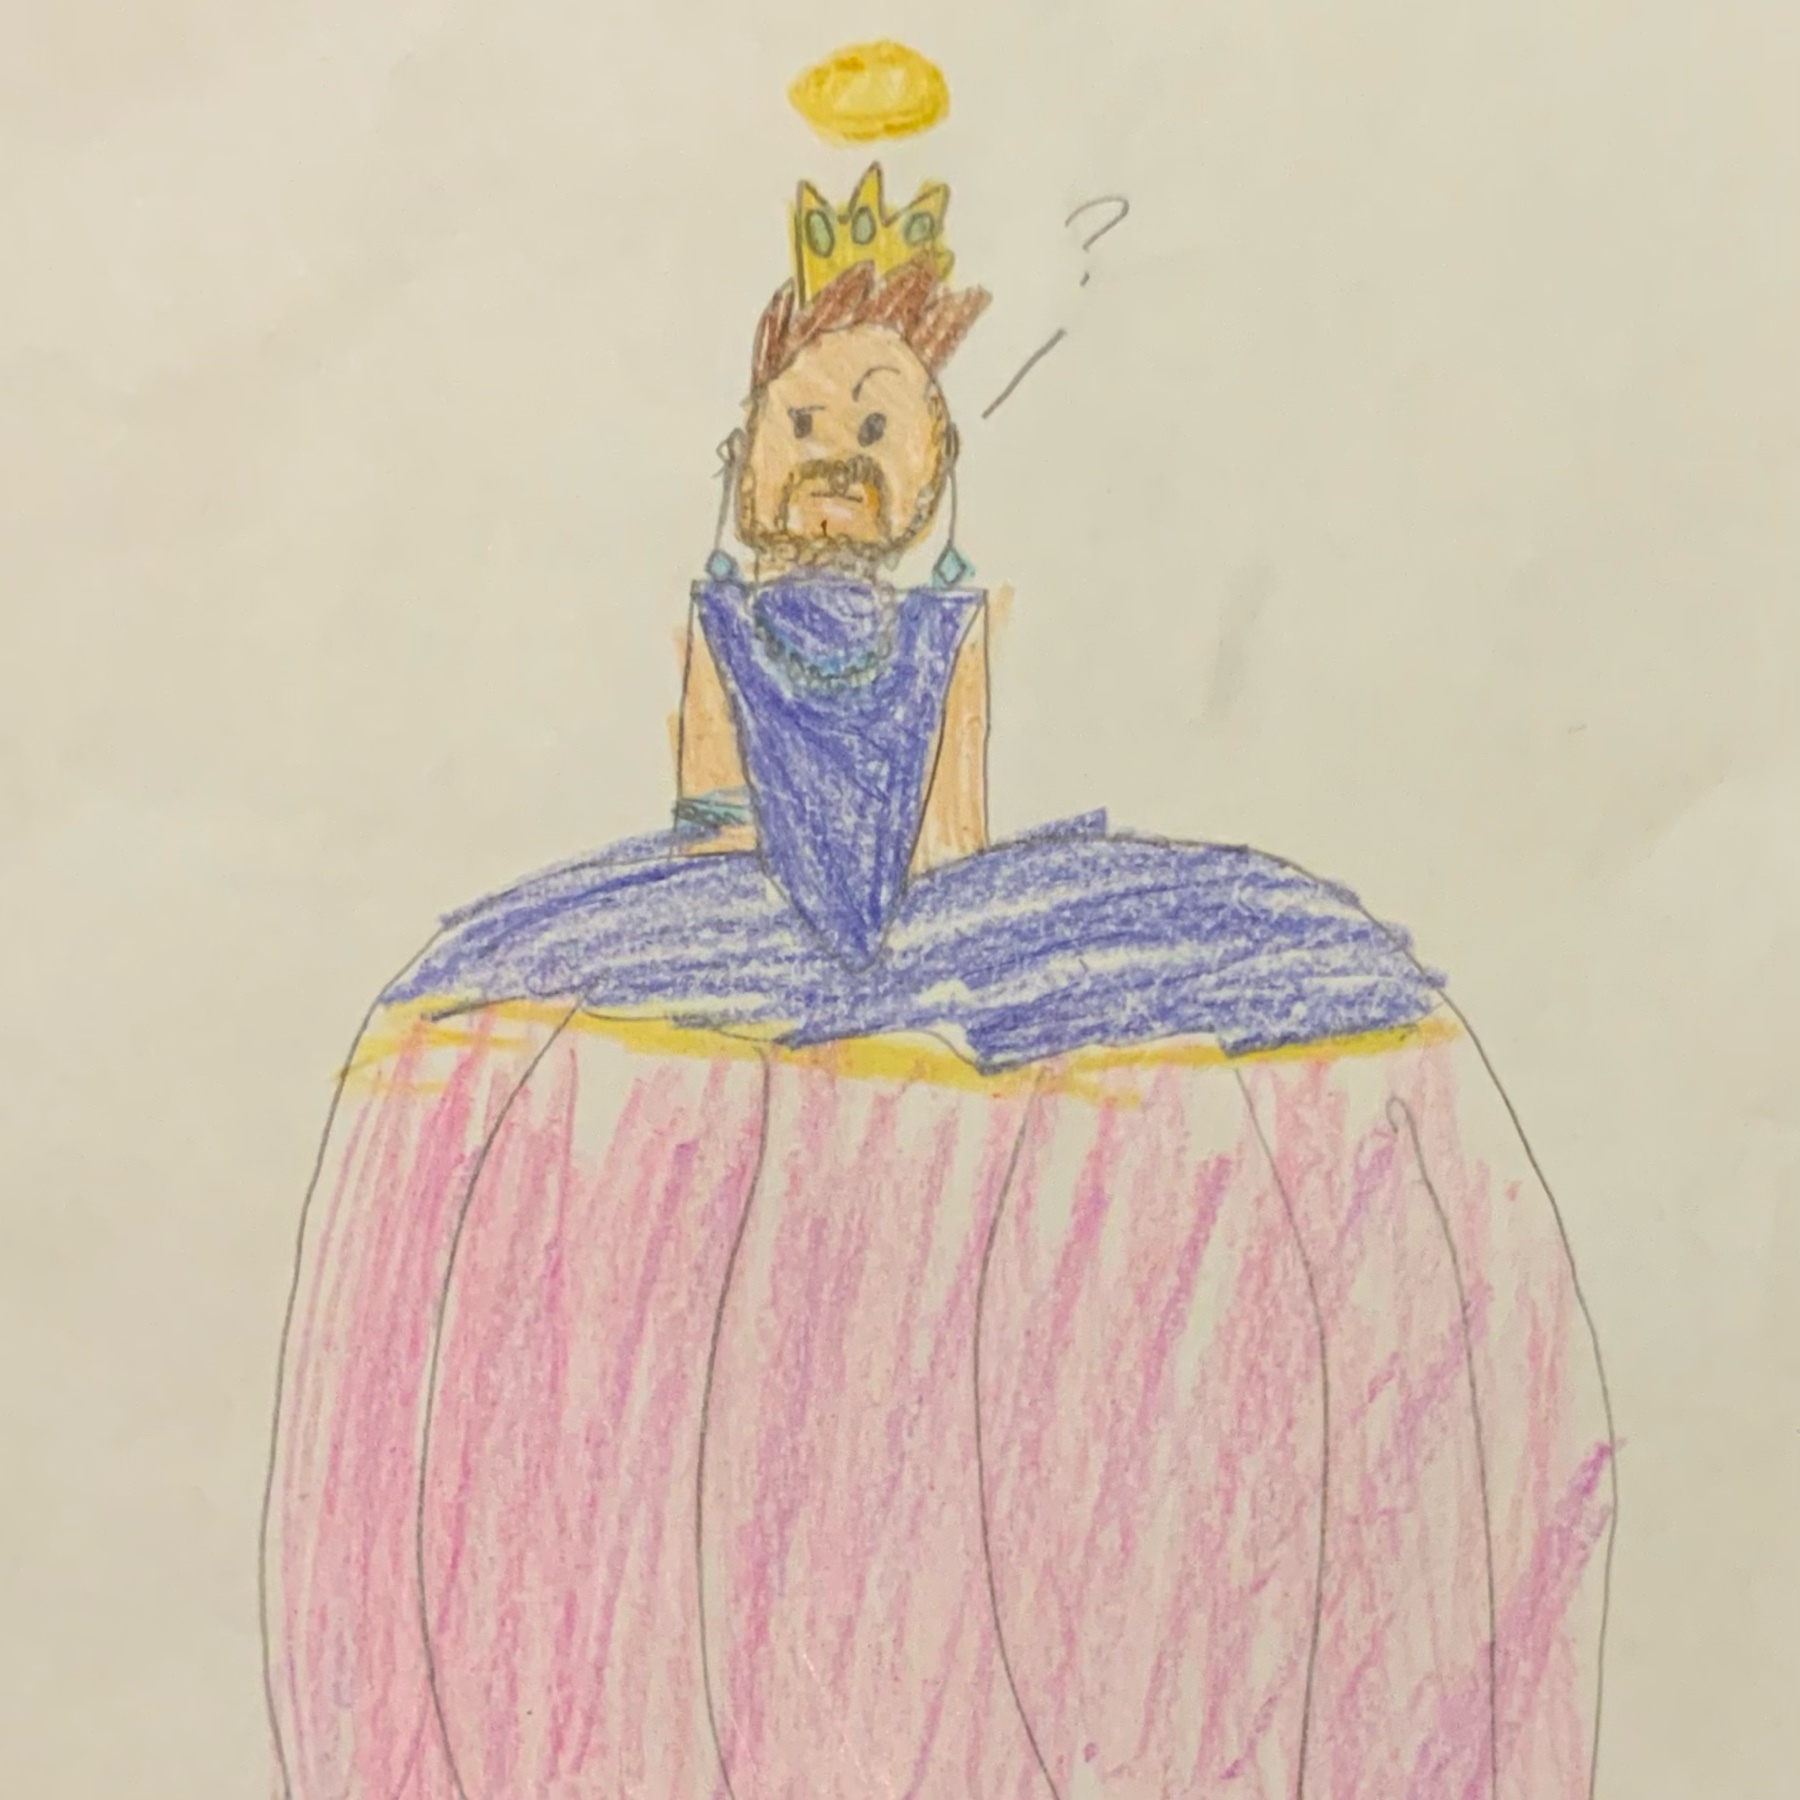 9yo artist's rendering of me with princess dress